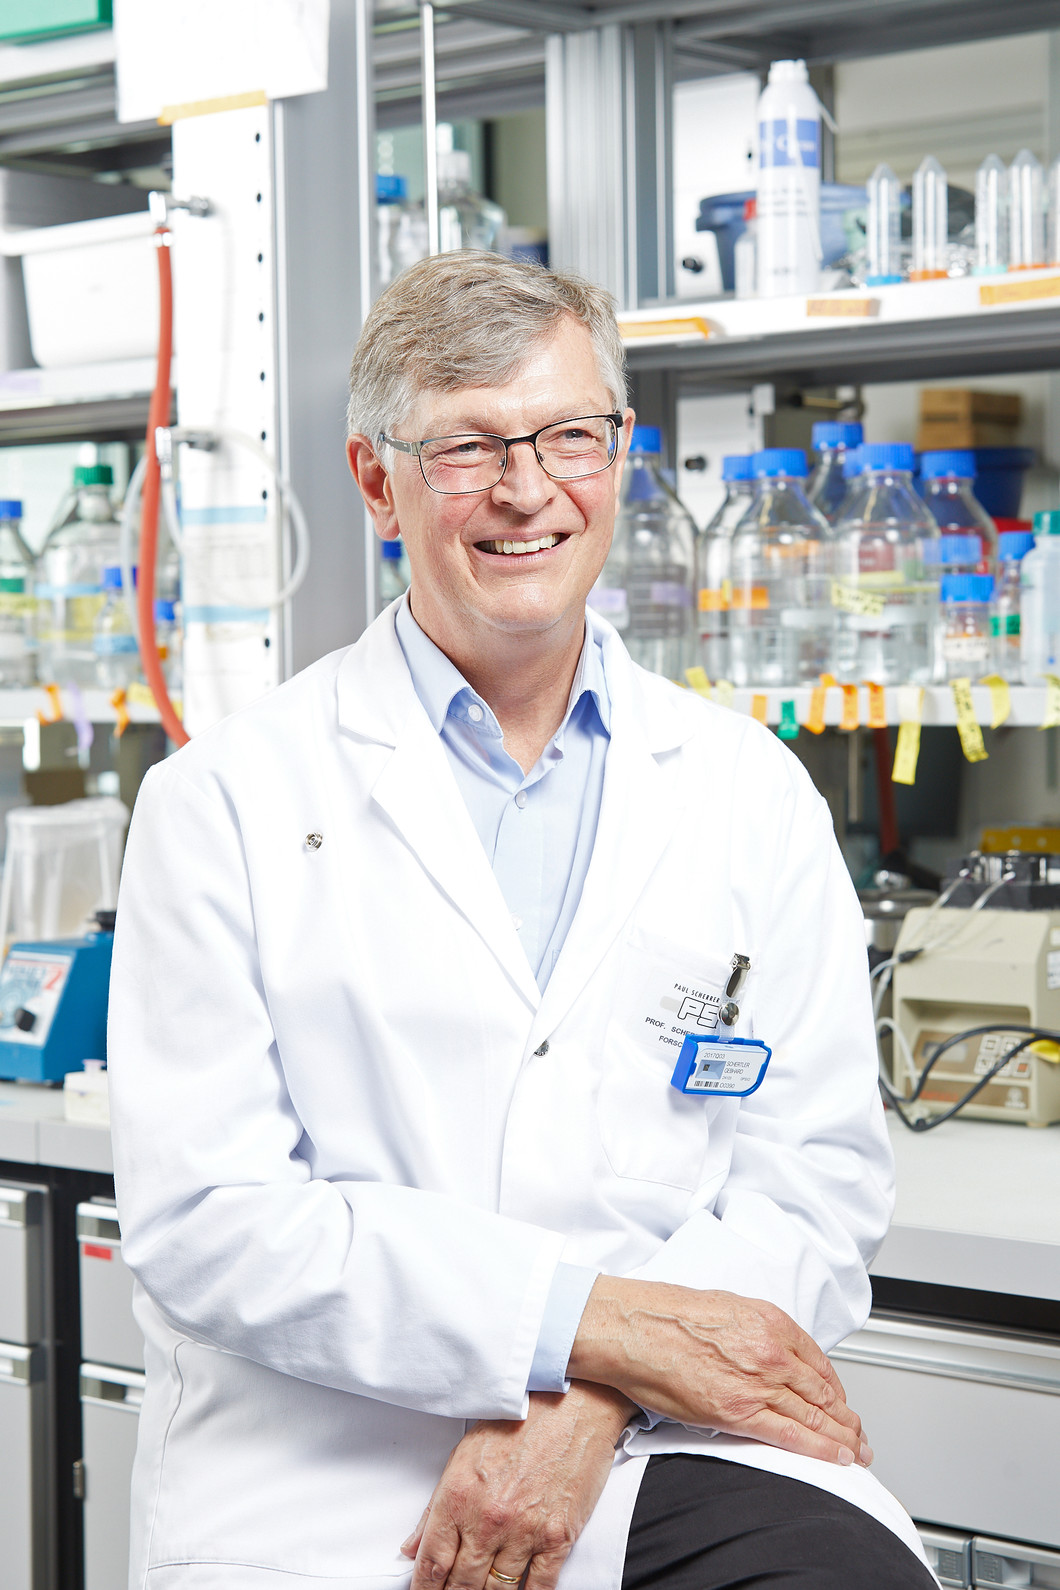 Prof. Gebhard Schertler, directeur du domaine de recherche Biologie et Chimie à l’Institut Paul Scherrer. (Photo: Scanderbeg Sauer Photography)